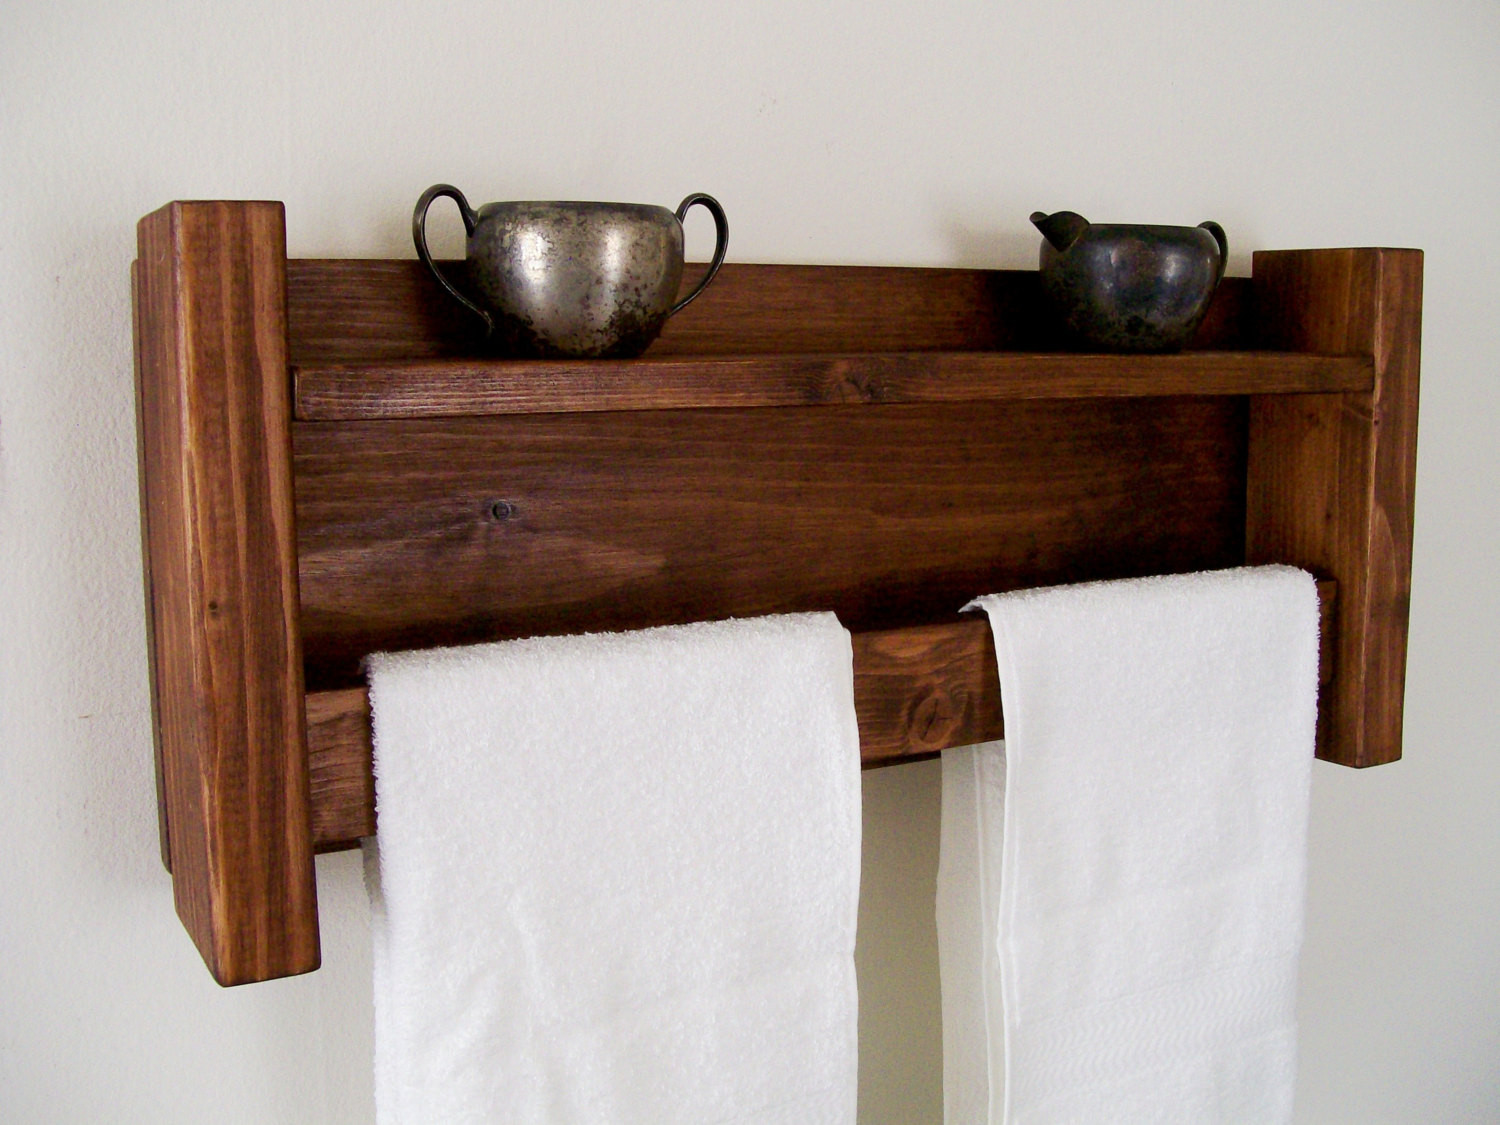 Best ideas about Bathroom Towel Bars
. Save or Pin Bathroom Towel Rack Towel Bar Towel Hook Towel Holder Bathroom Now.